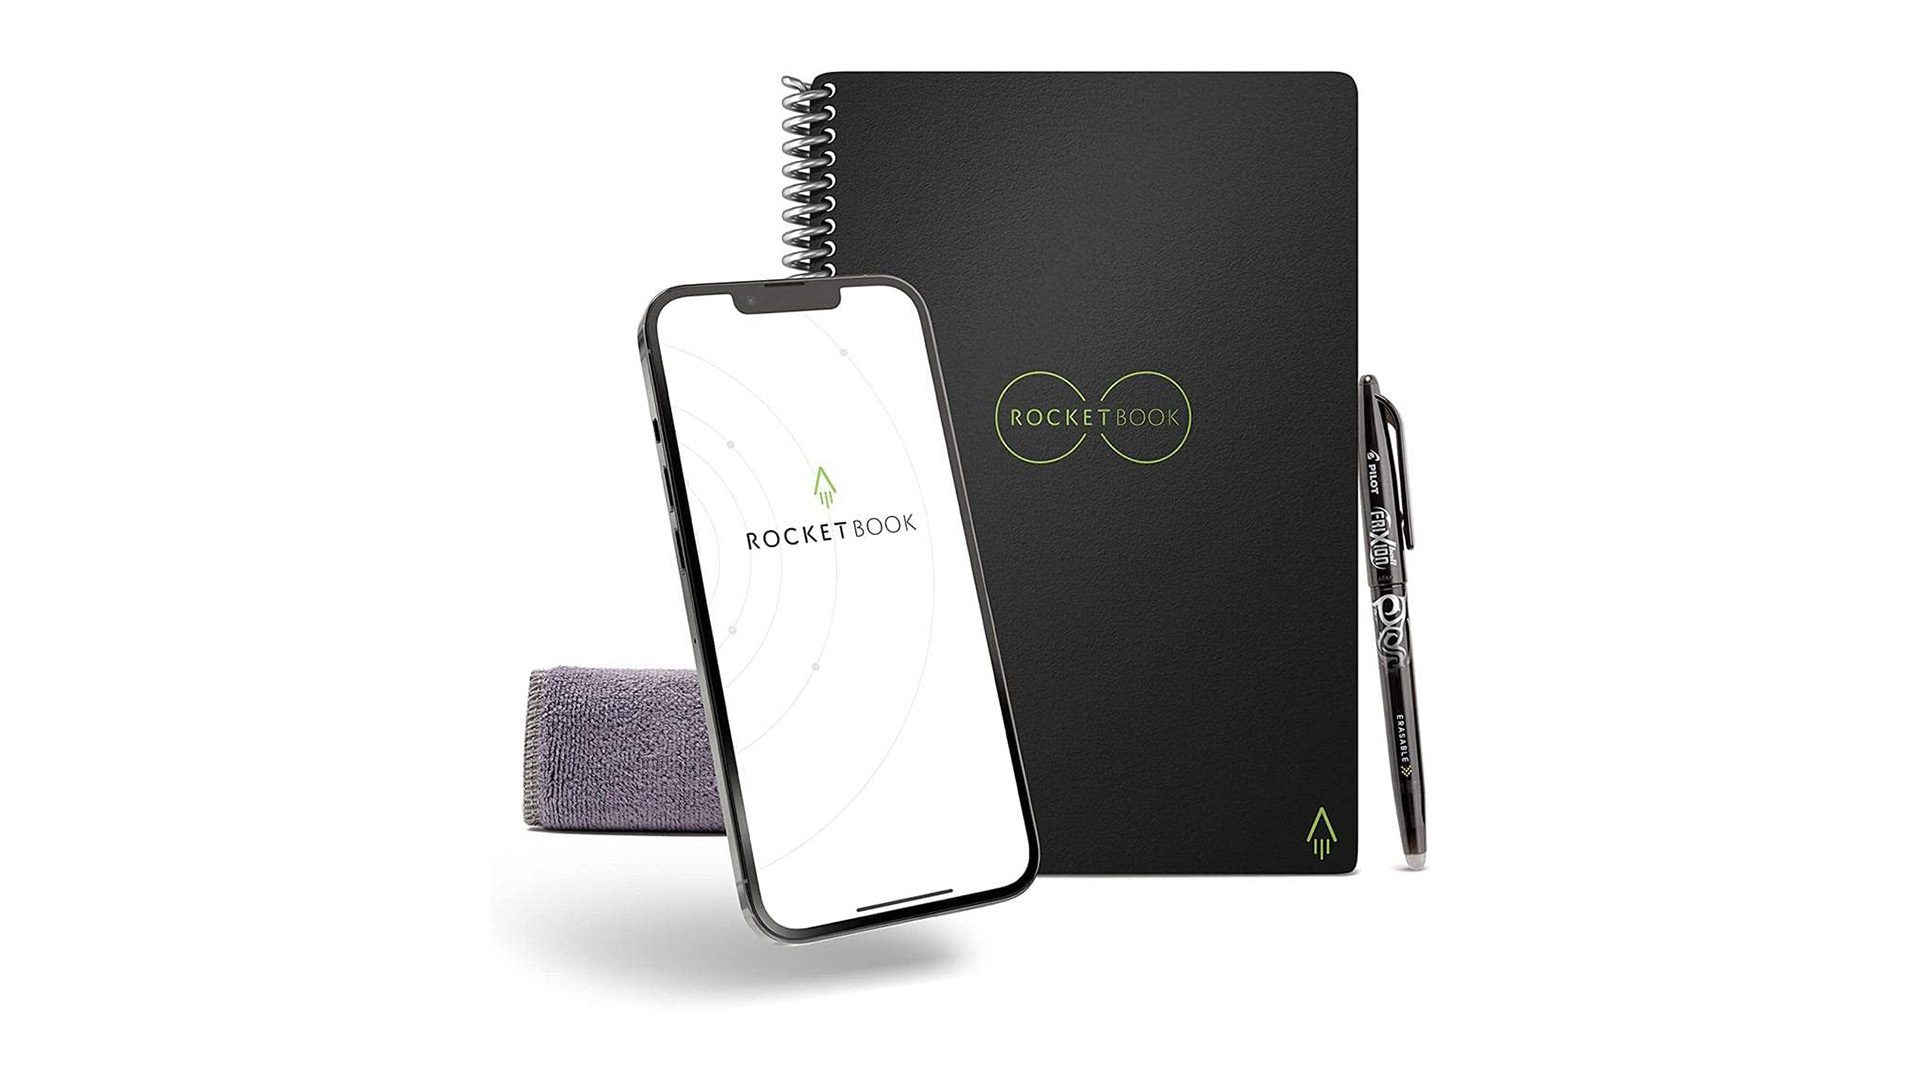 Rocketbook’s Smart Reusable Notebook